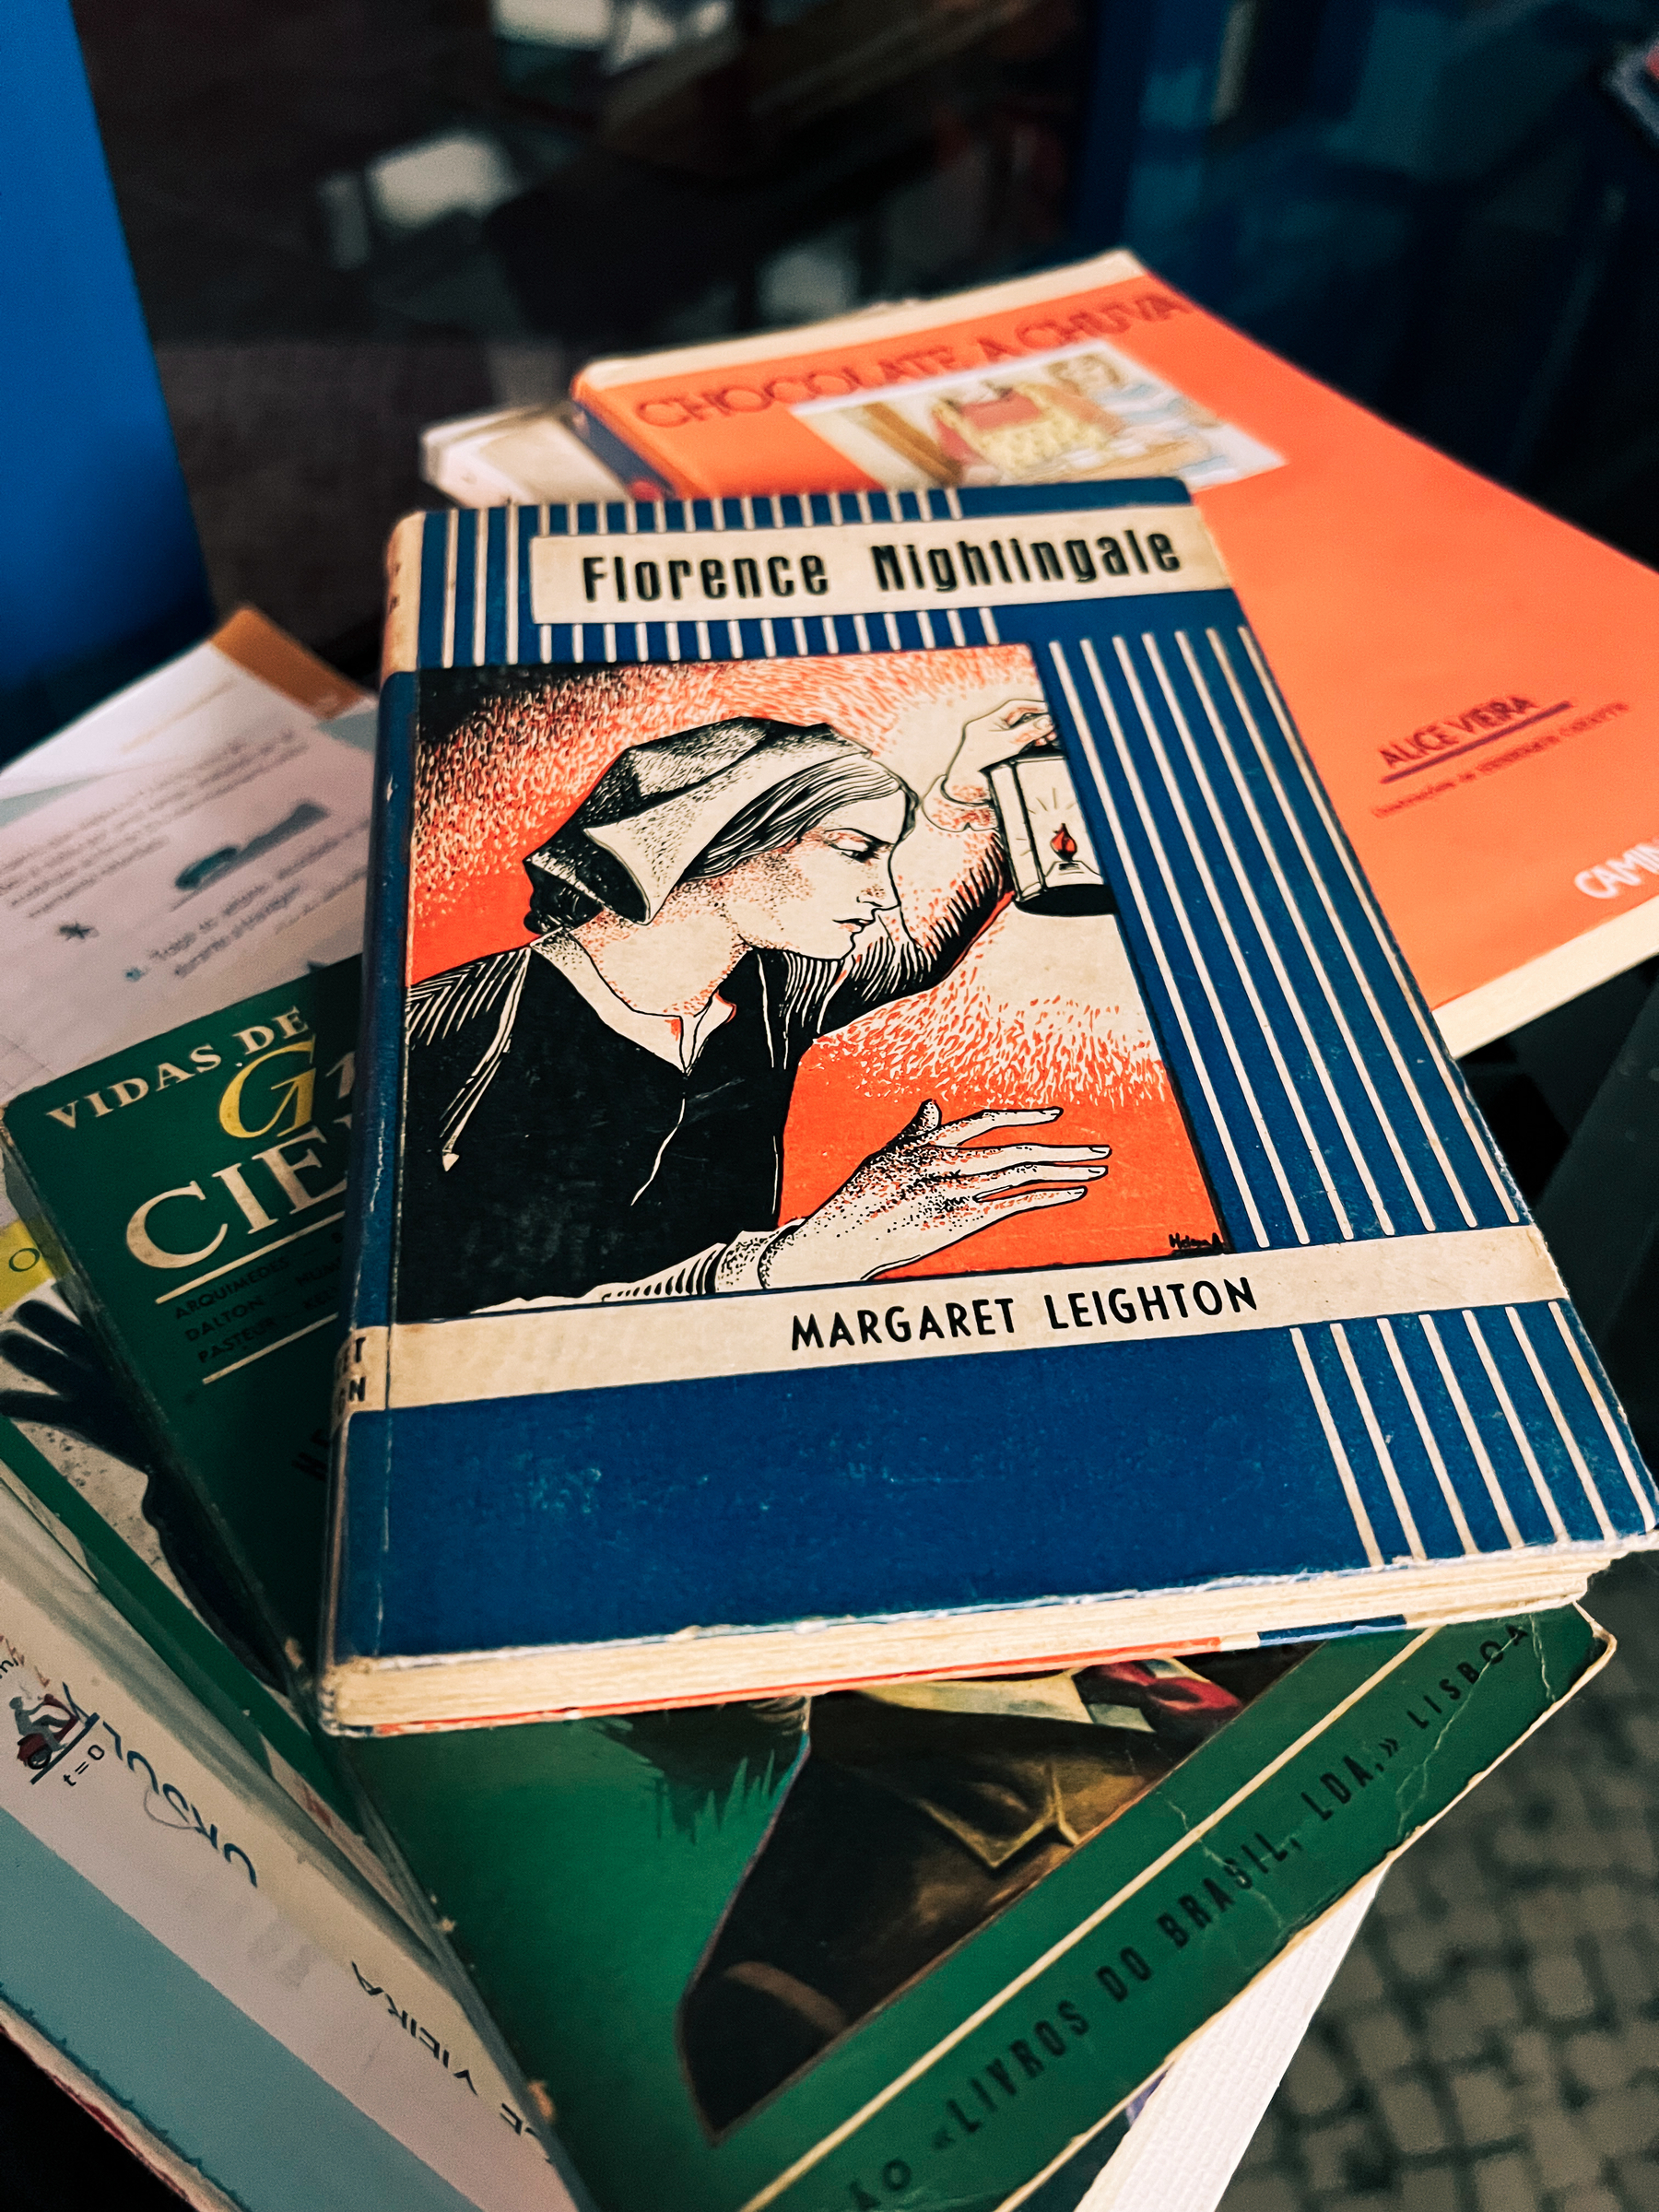 &ldquo;Florence Nightingale&rdquo;, Margaret Leighton, vintage paperback.